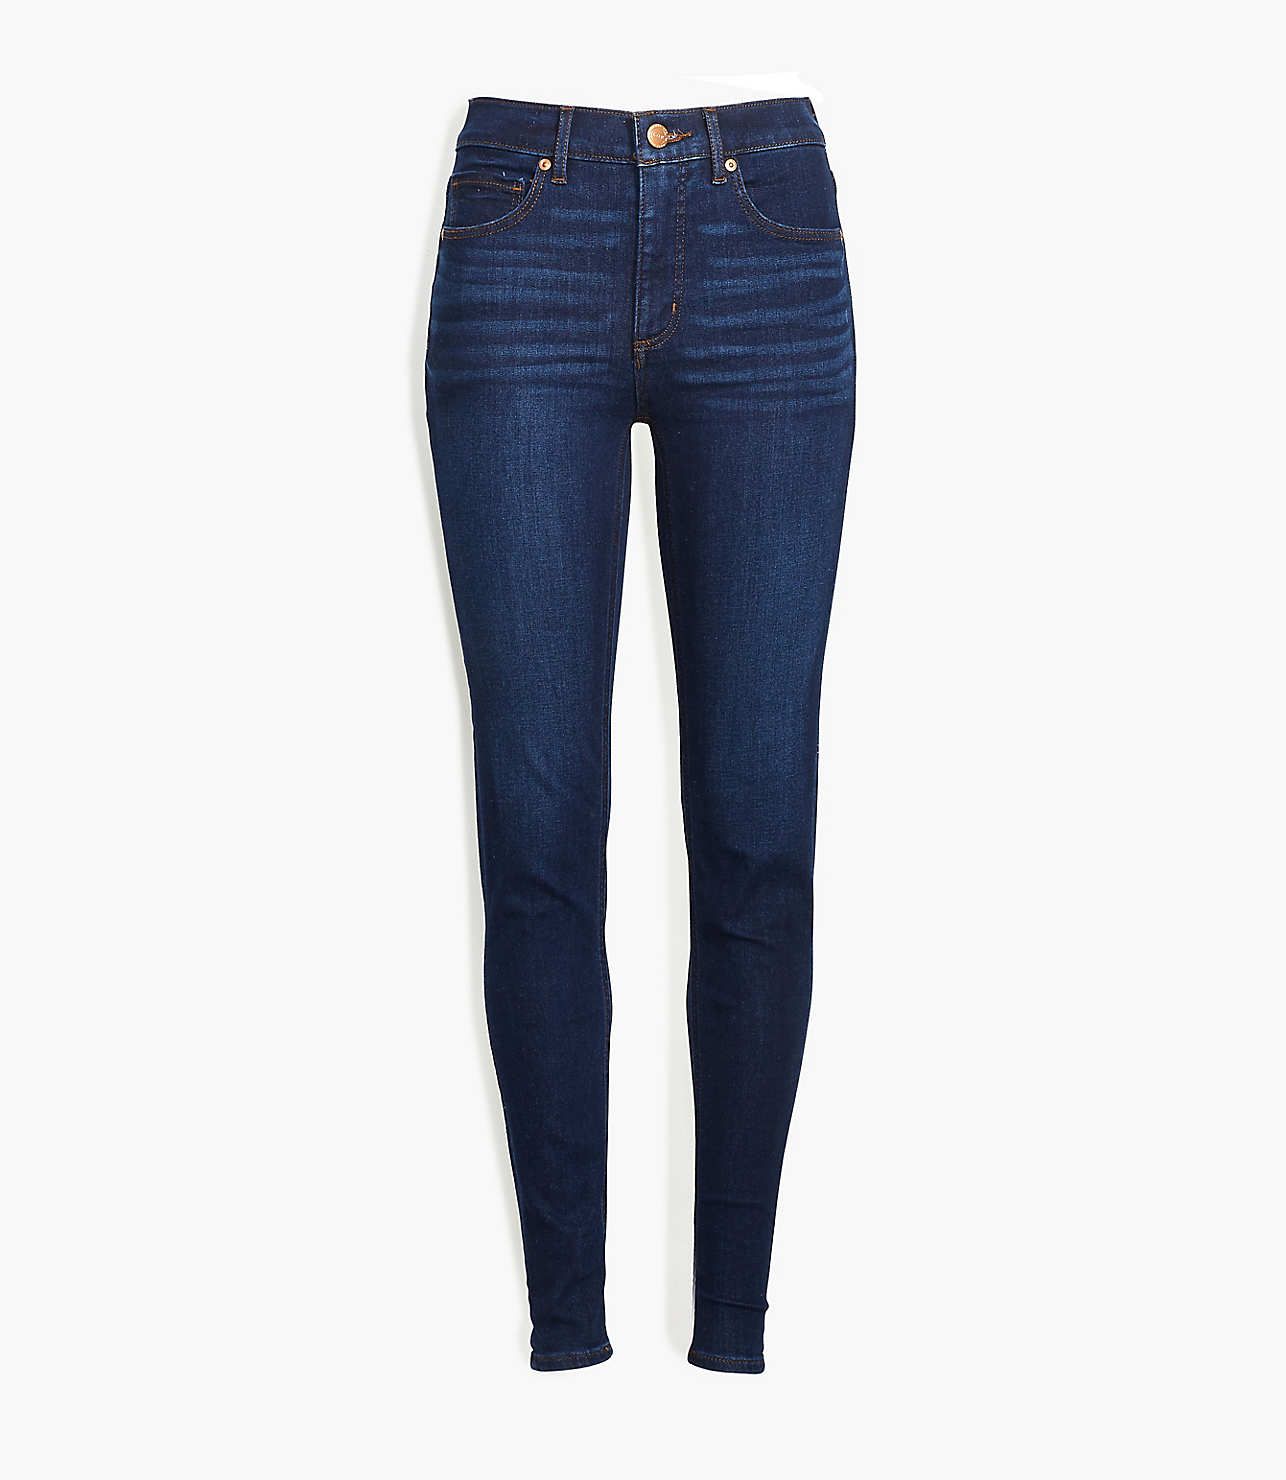 Tall Skinny Jeans in Classic Dark Indigo Wash | LOFT